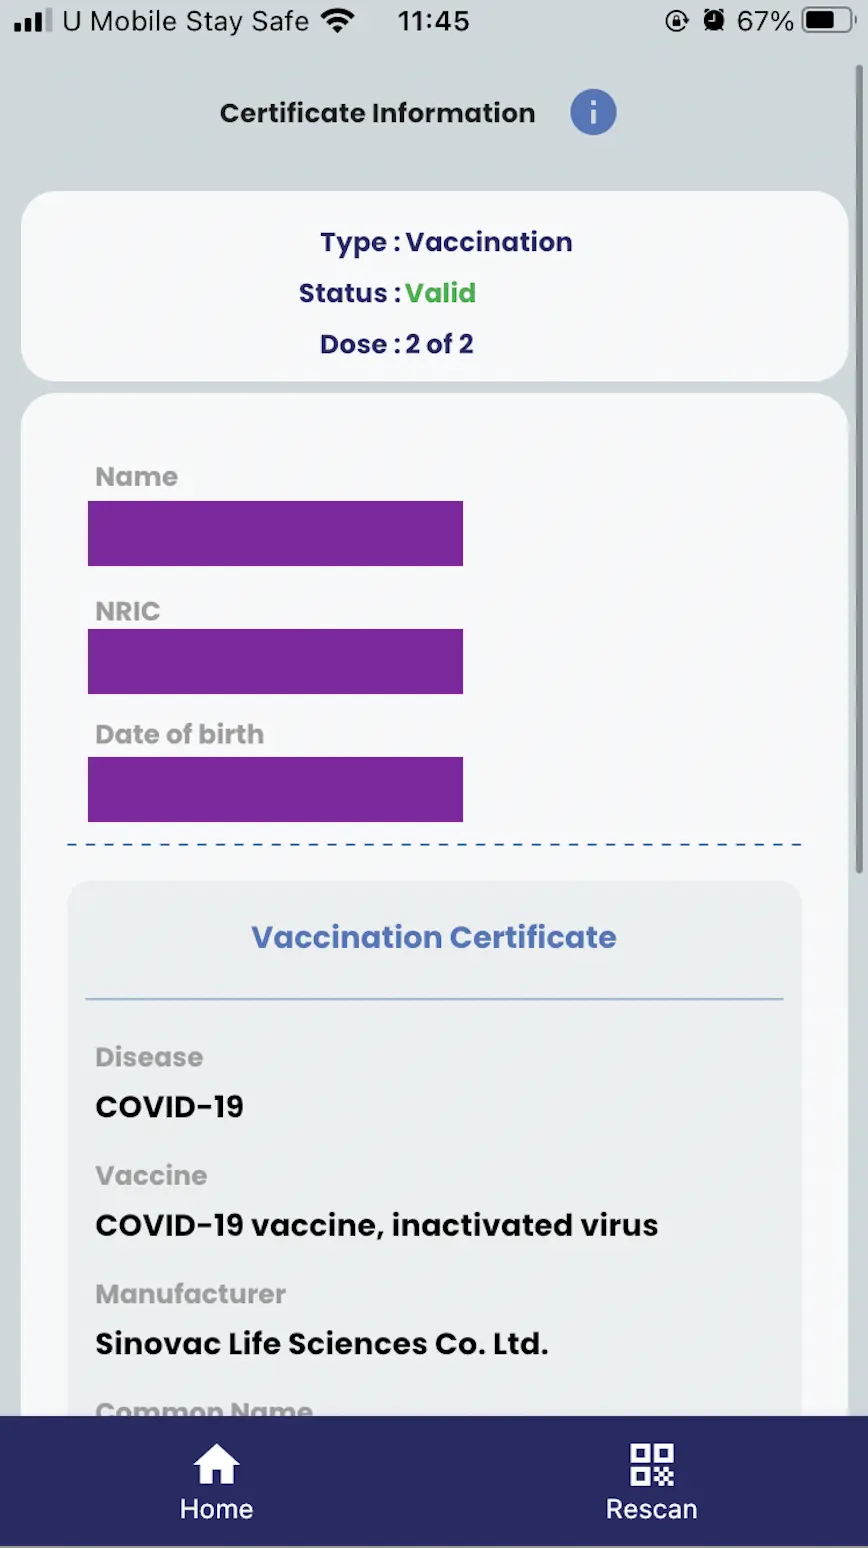 Verify your digital vaccination certificate with vaccine certificate verifier | weirdkaya